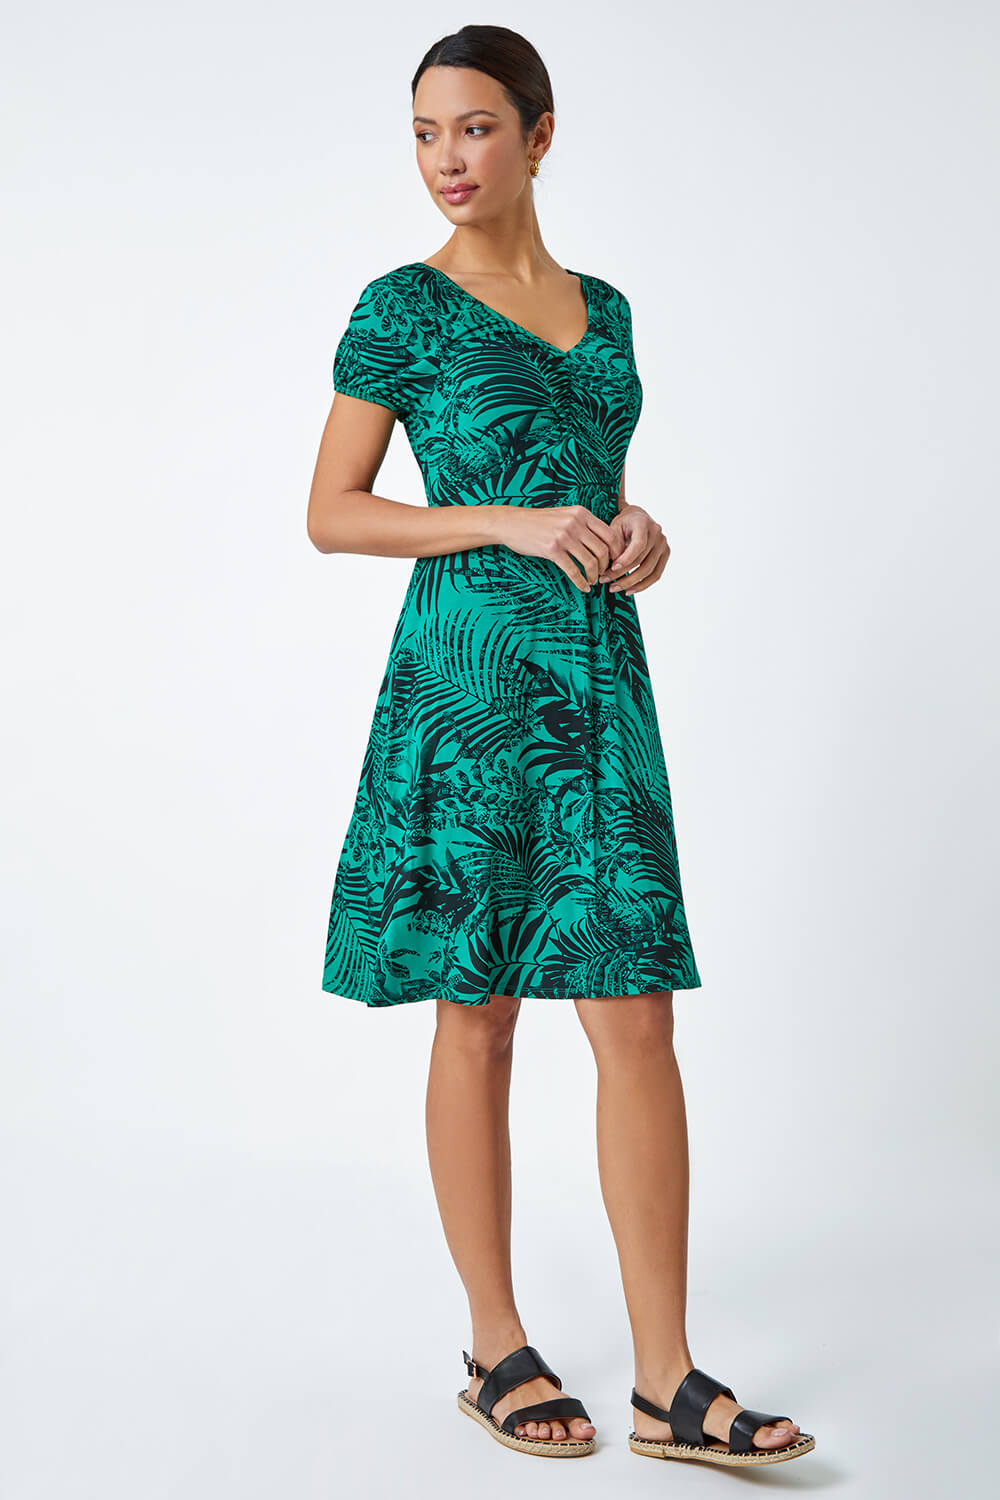 Green Leaf Print Stretch Ruched Dress, Image 2 of 5